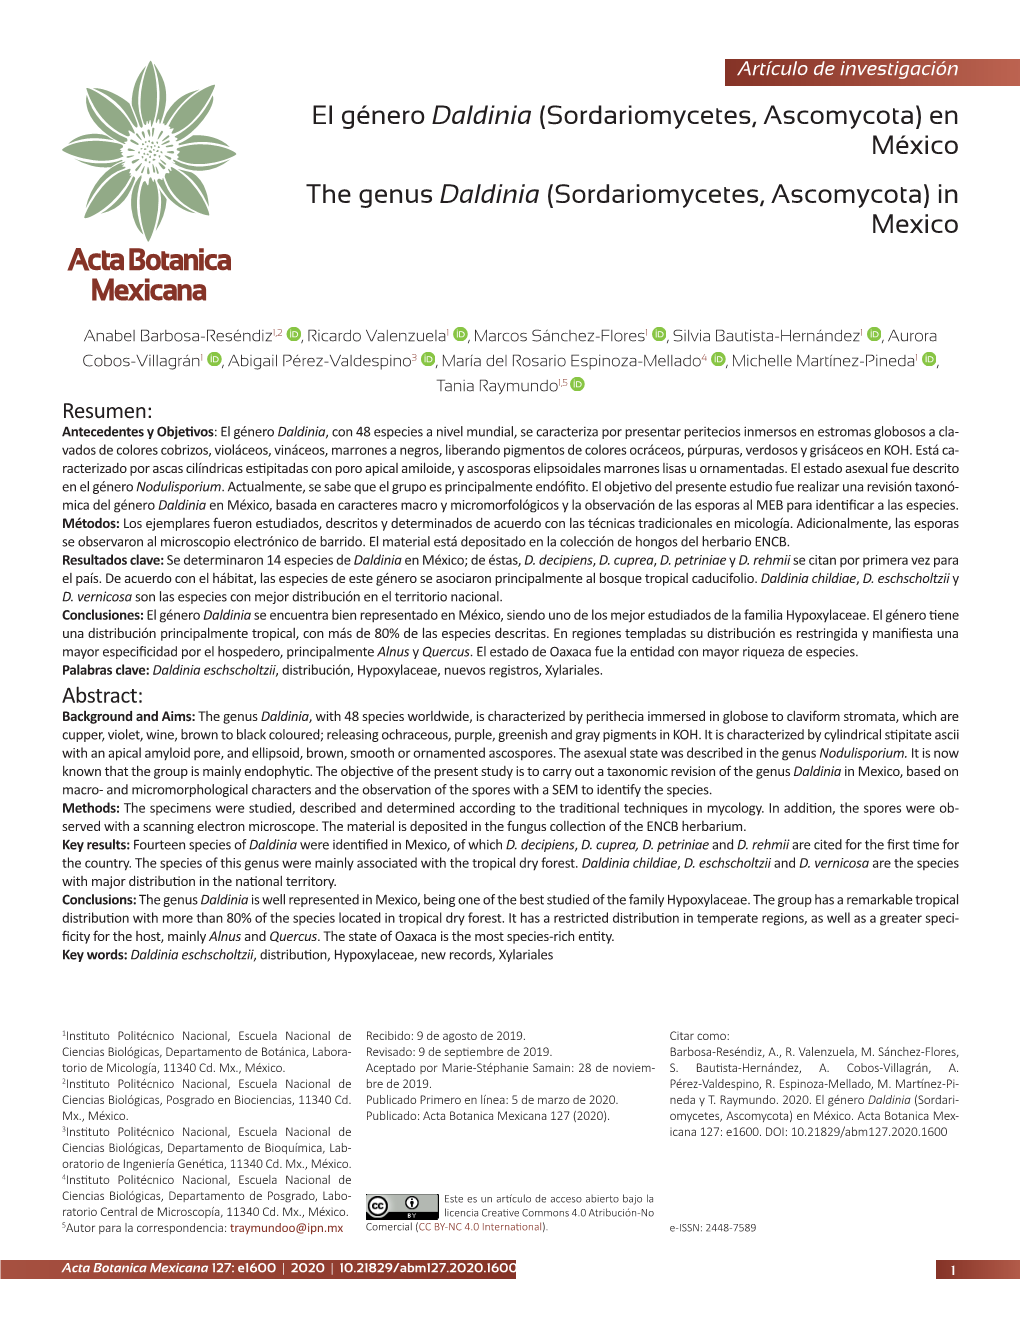 El Género Daldinia (Sordariomycetes, Ascomycota) En México the Genus Daldinia (Sordariomycetes, Ascomycota) in Mexico